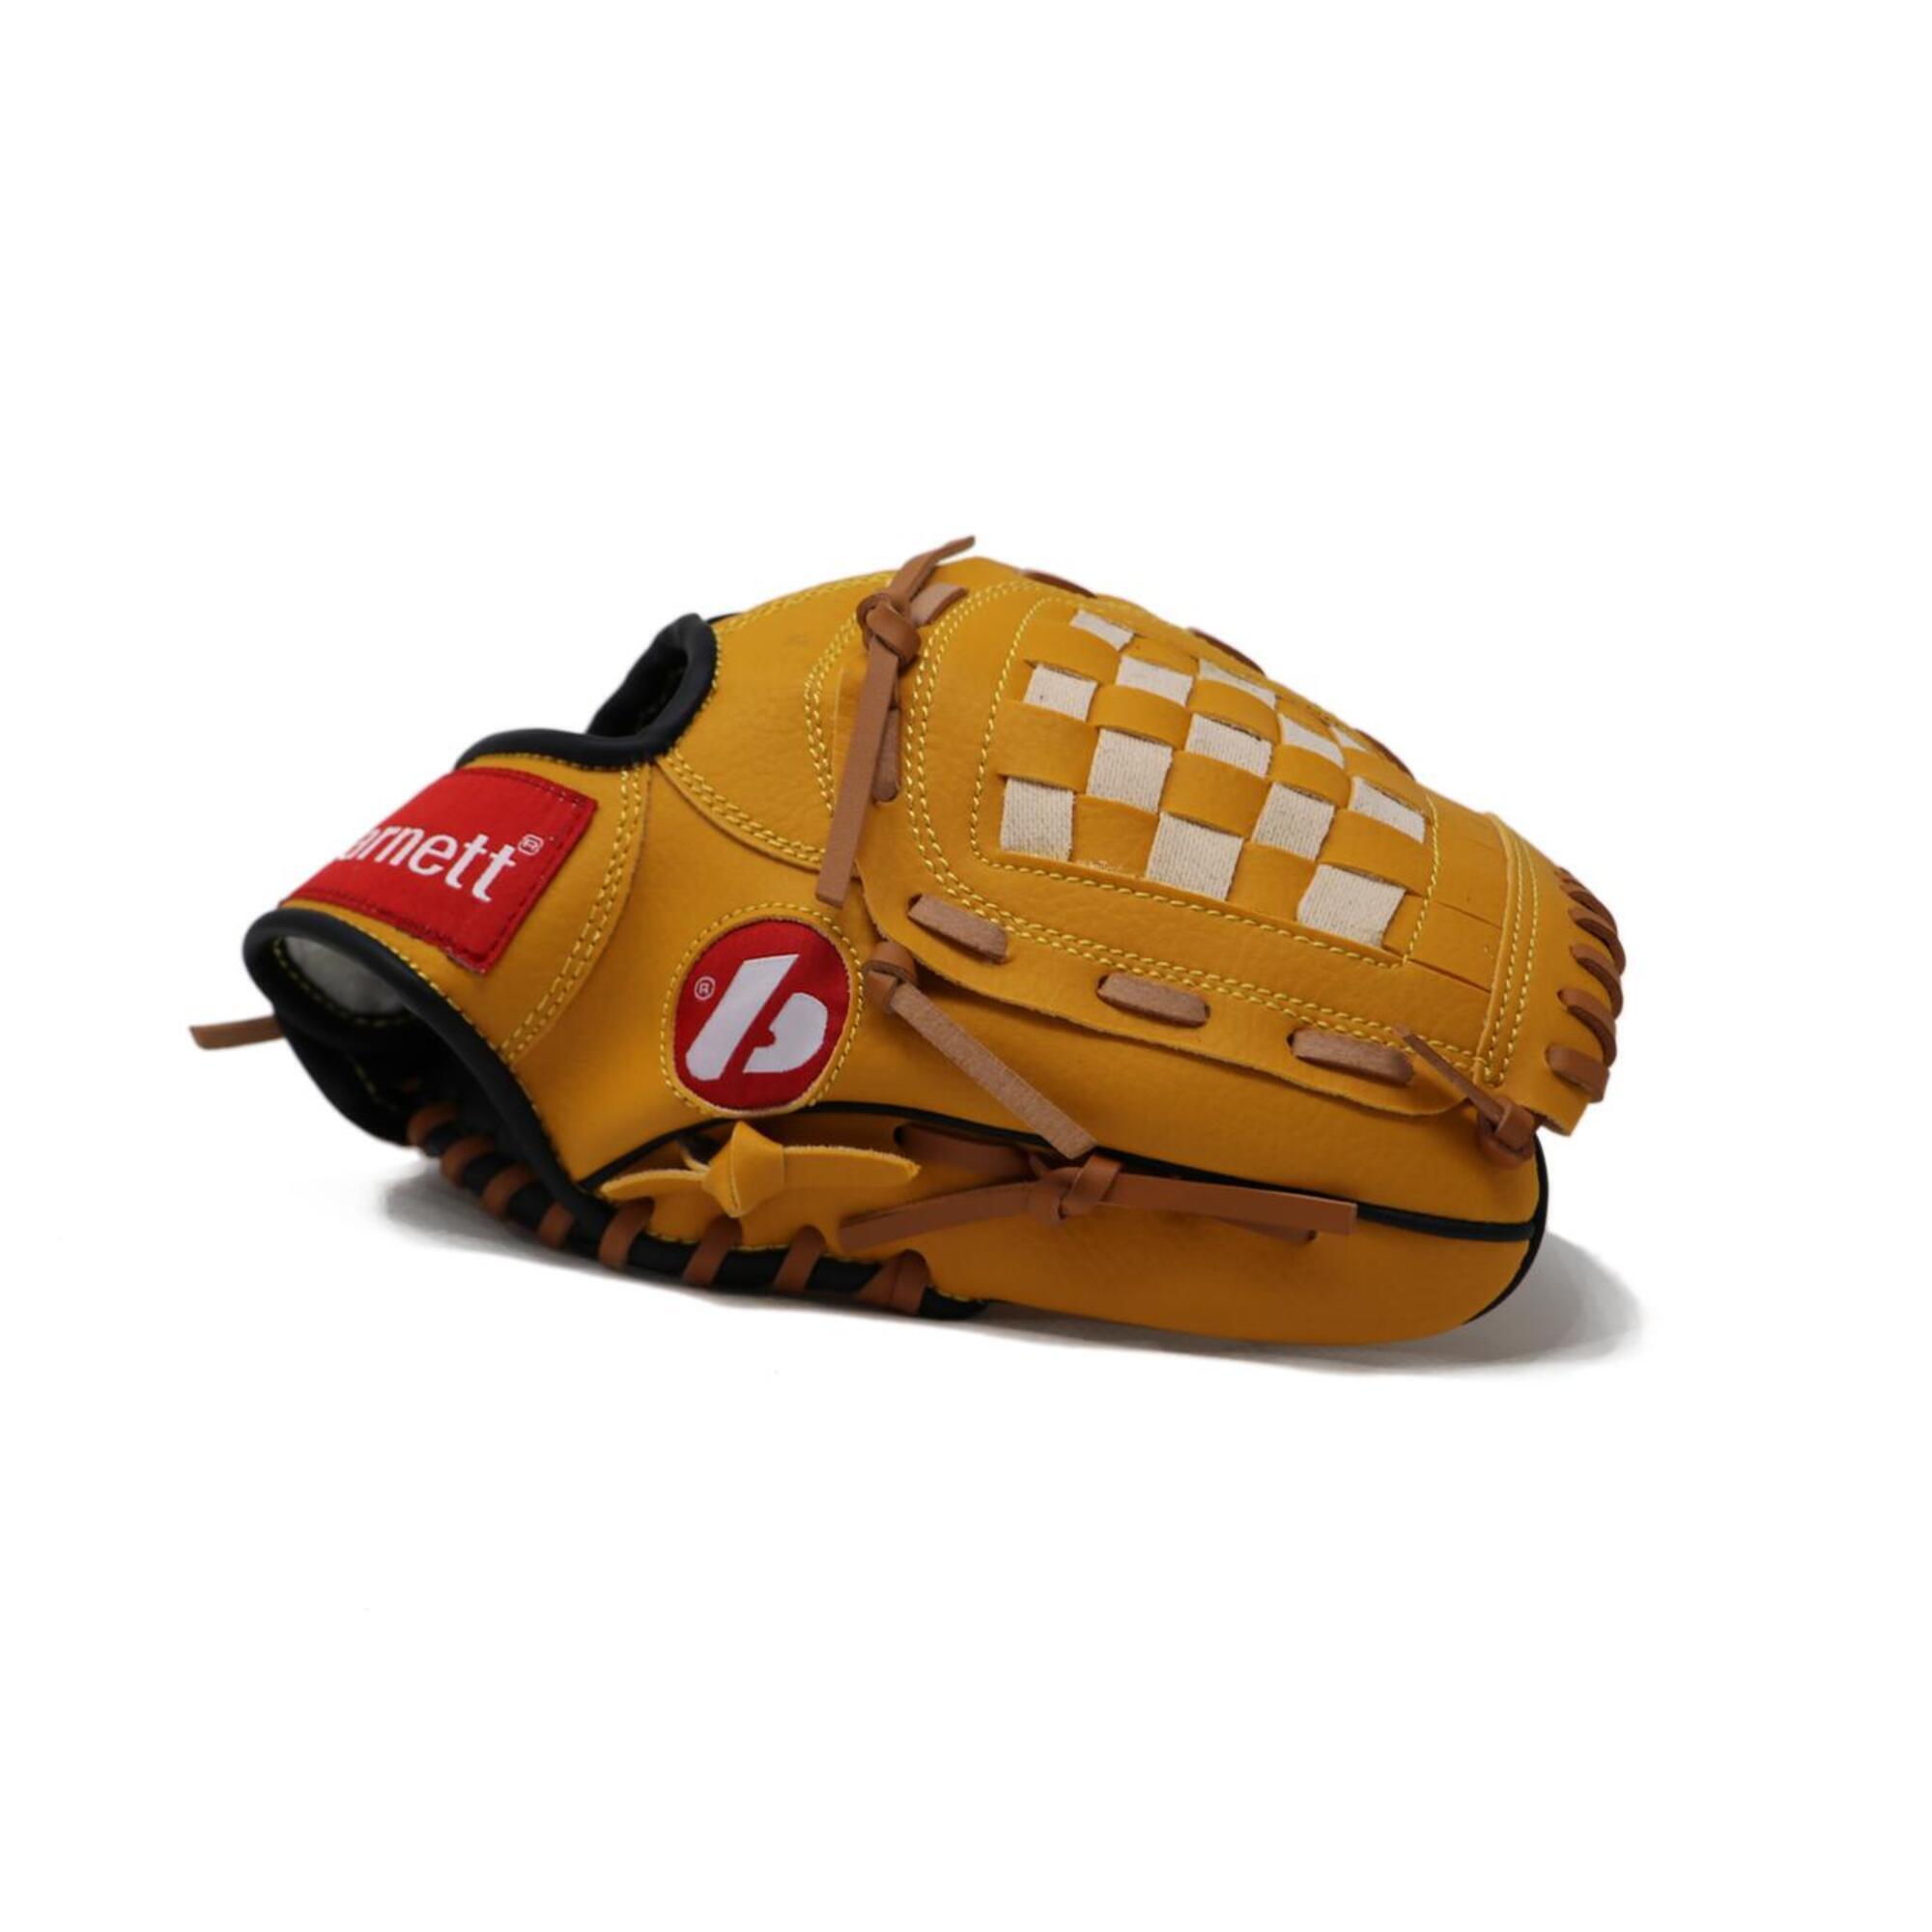 BARNETT  JL-105 REG baseball glove